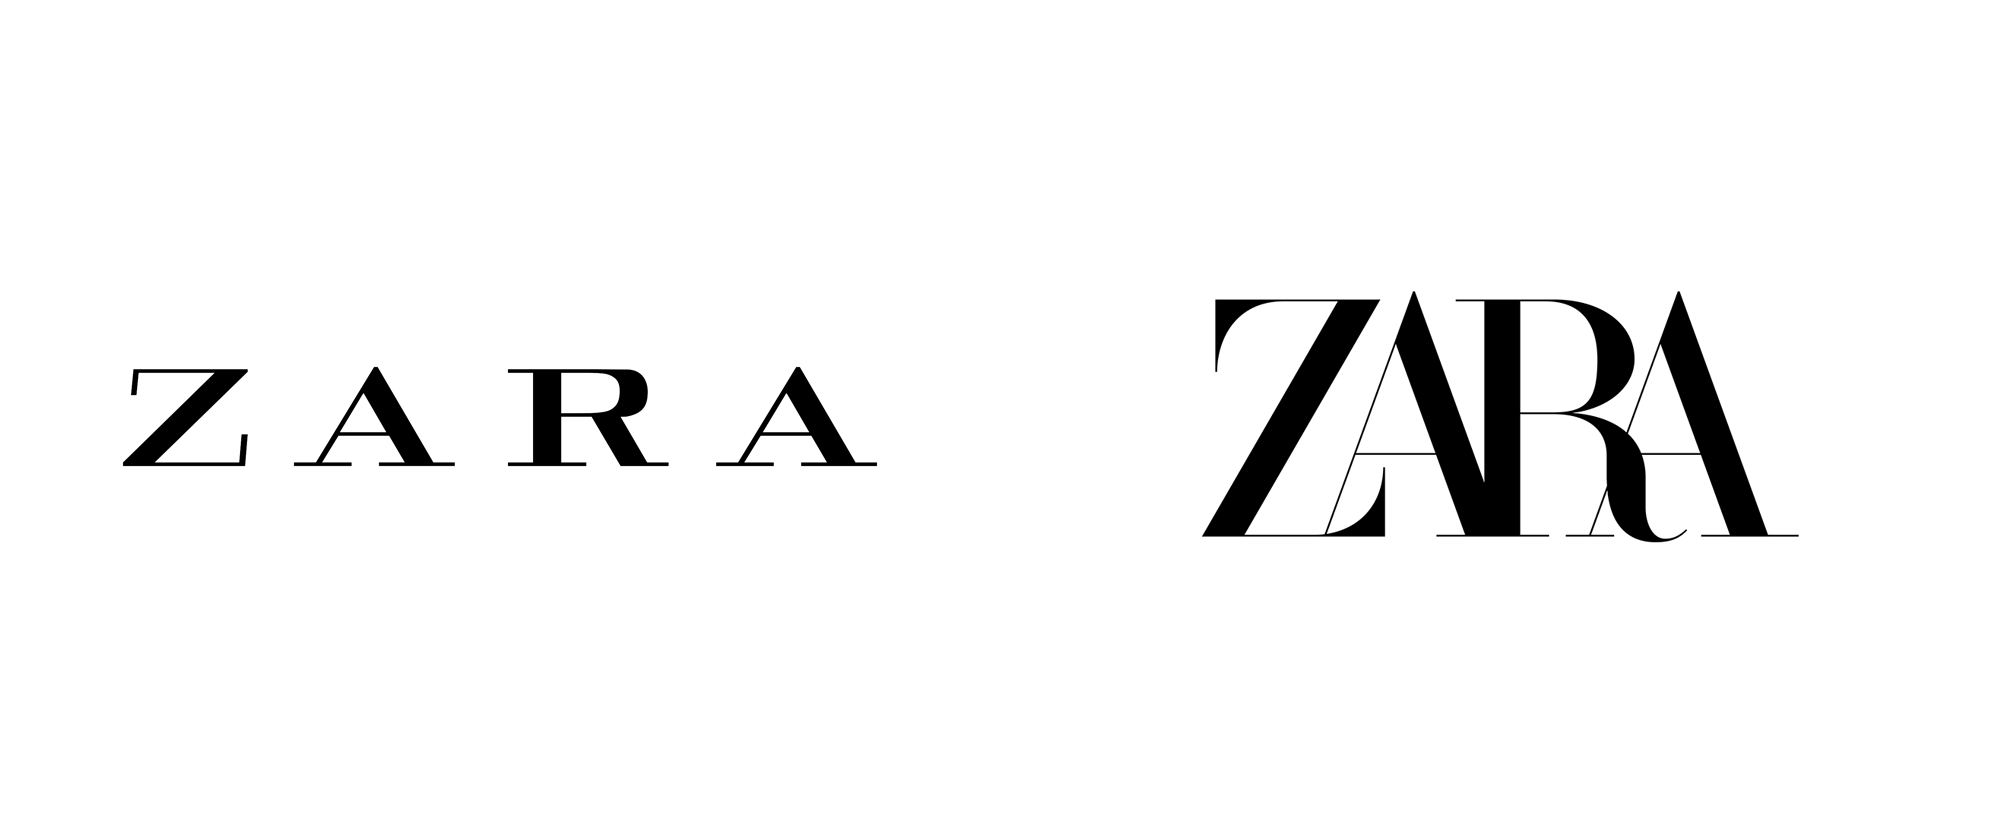 zara new brand